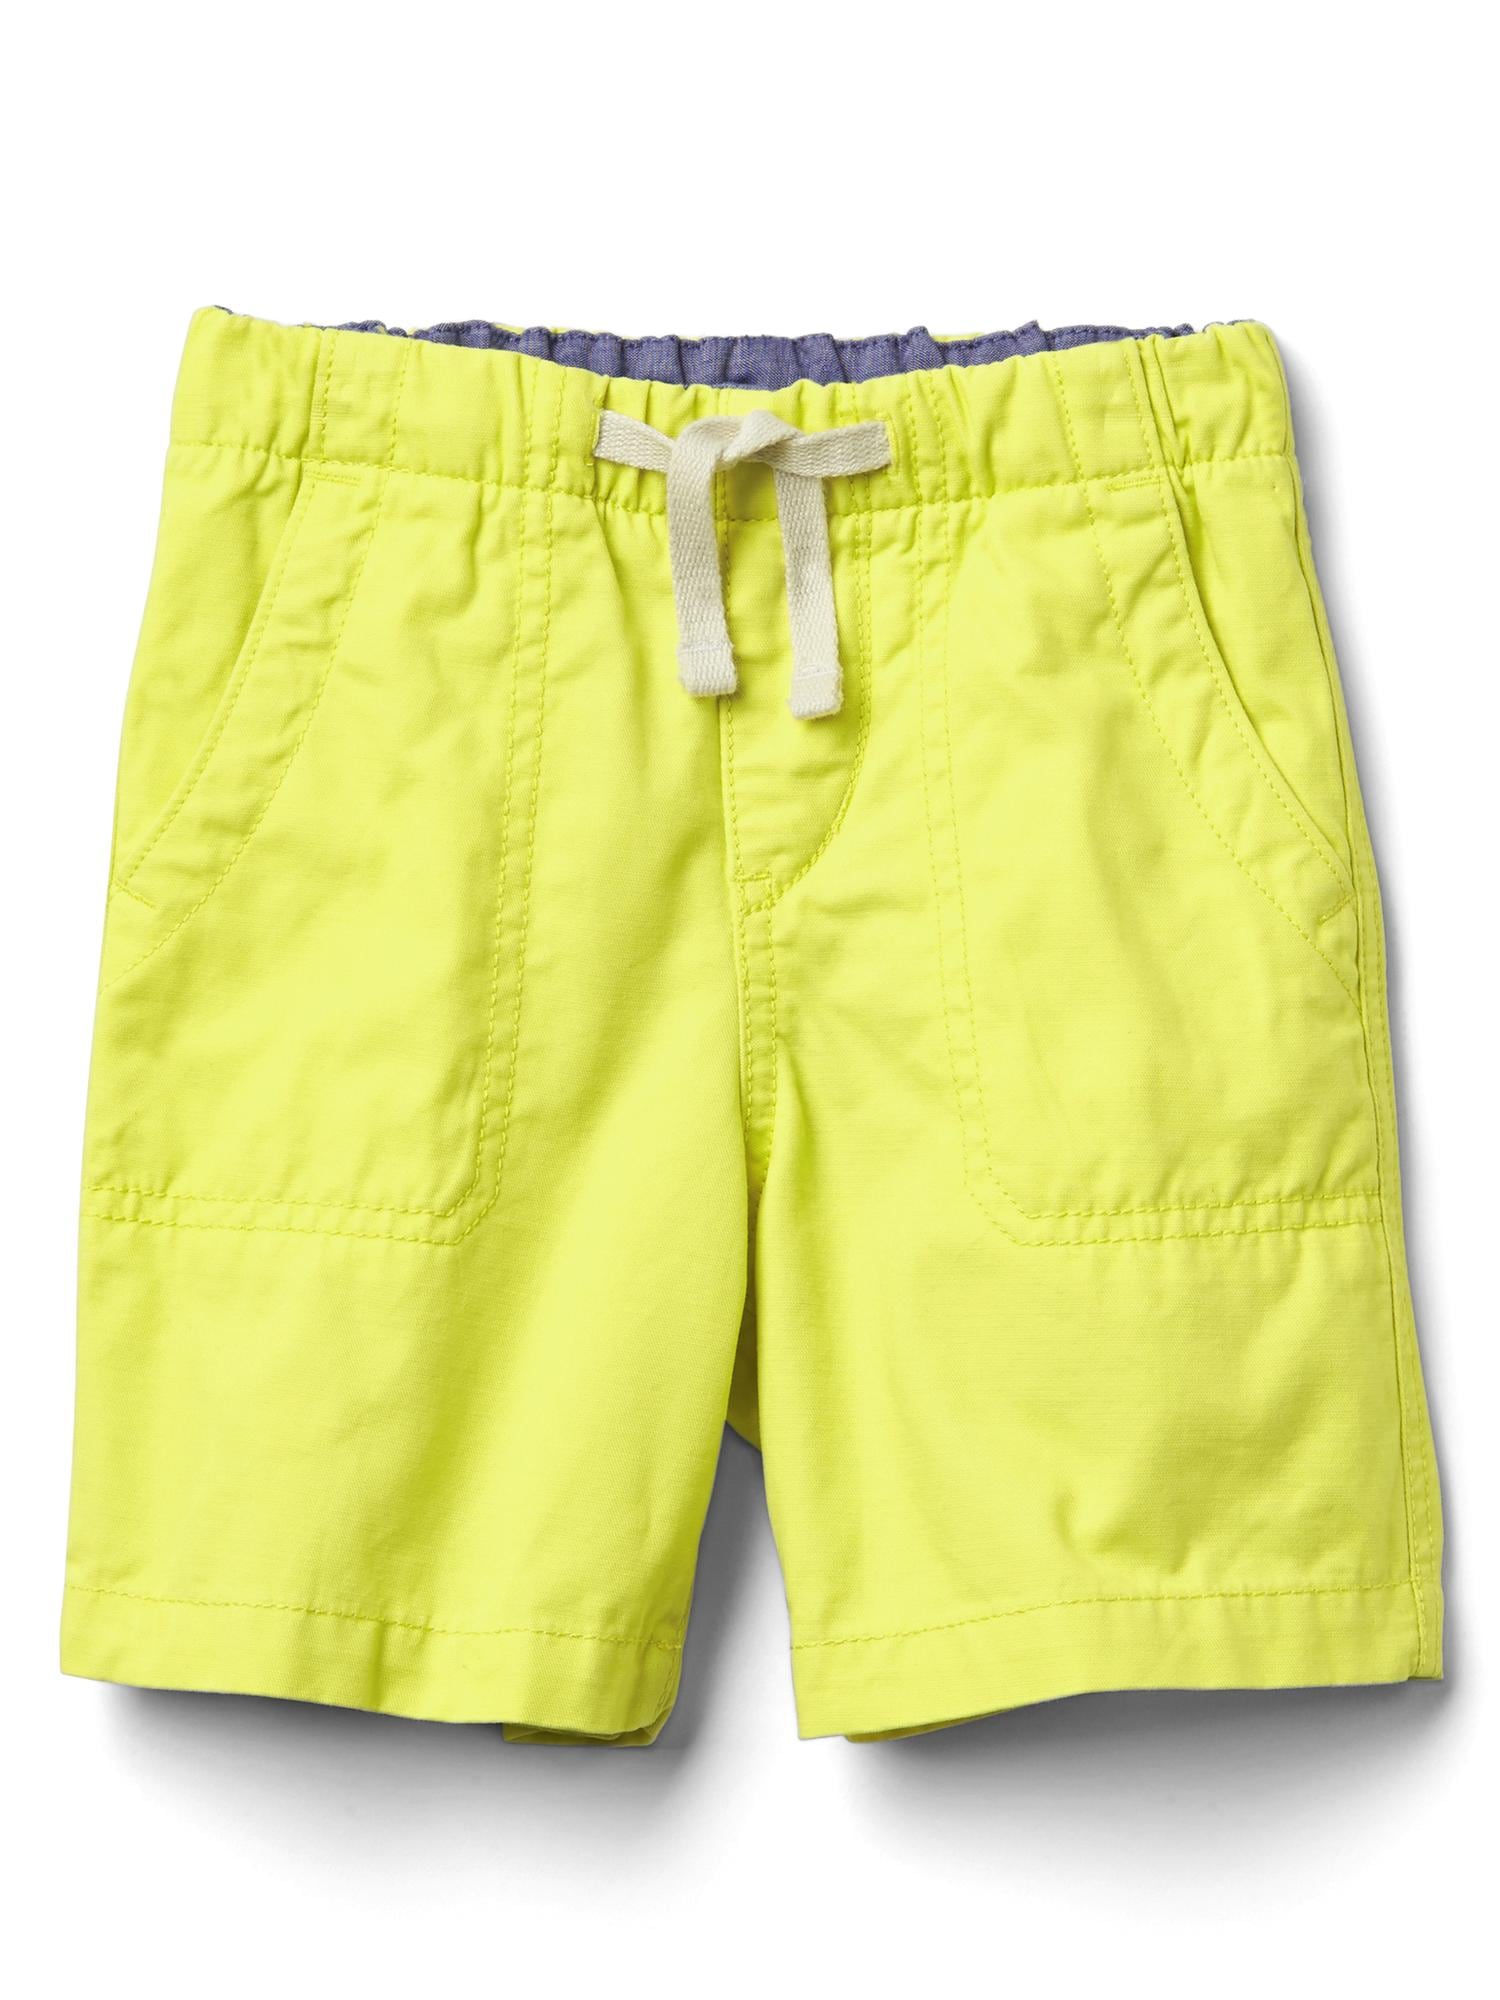 Twill pull-on shorts | Gap